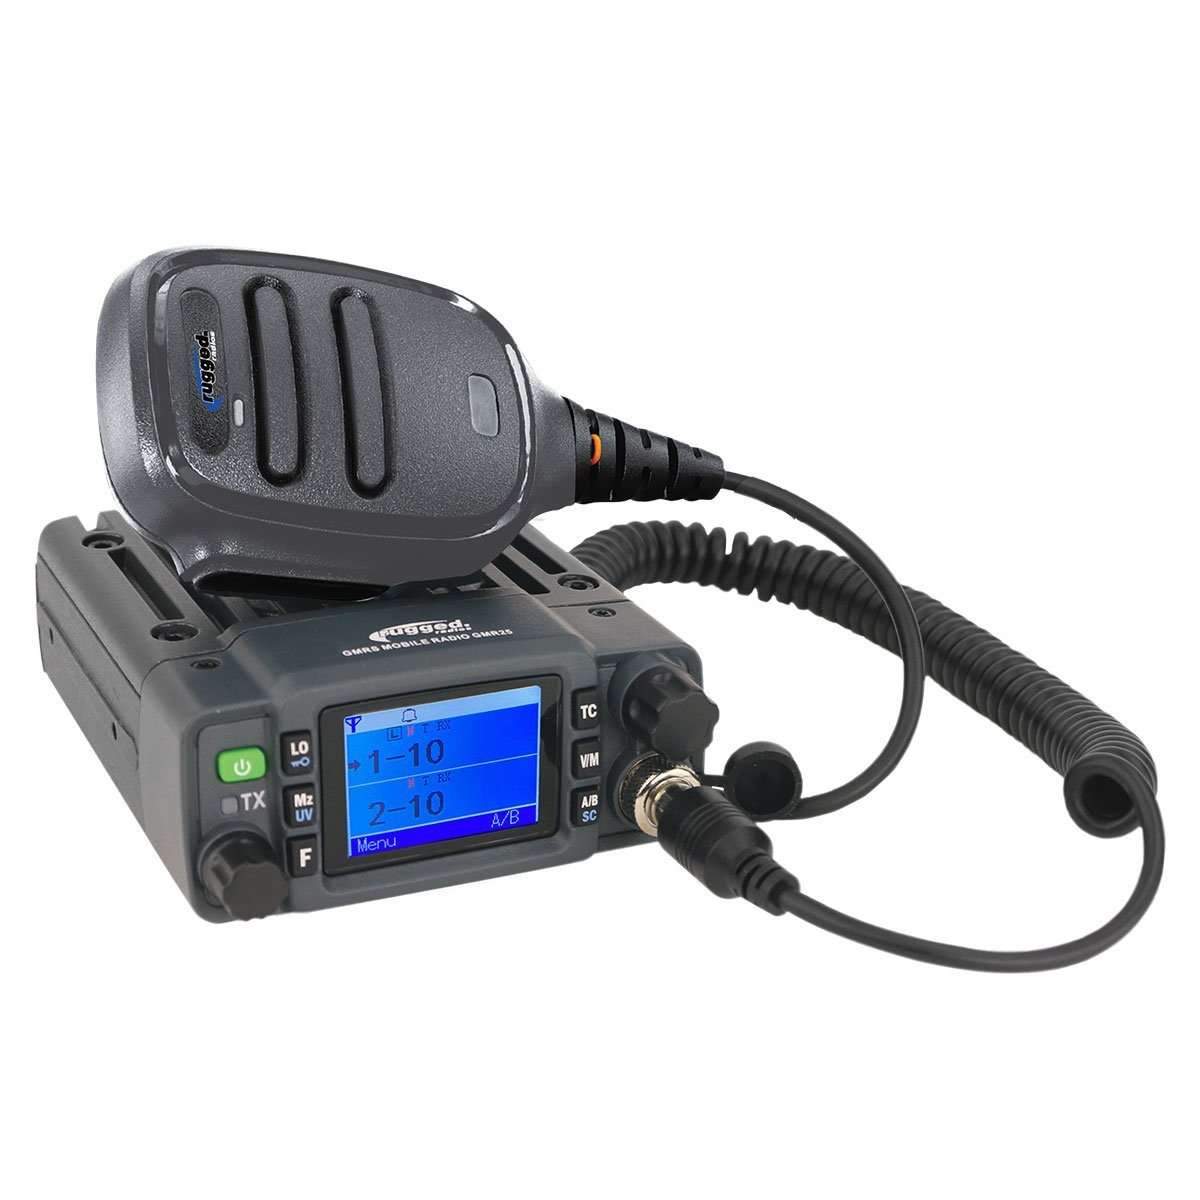 What's Better - VHF radios (Rugged radio) or CB radio?